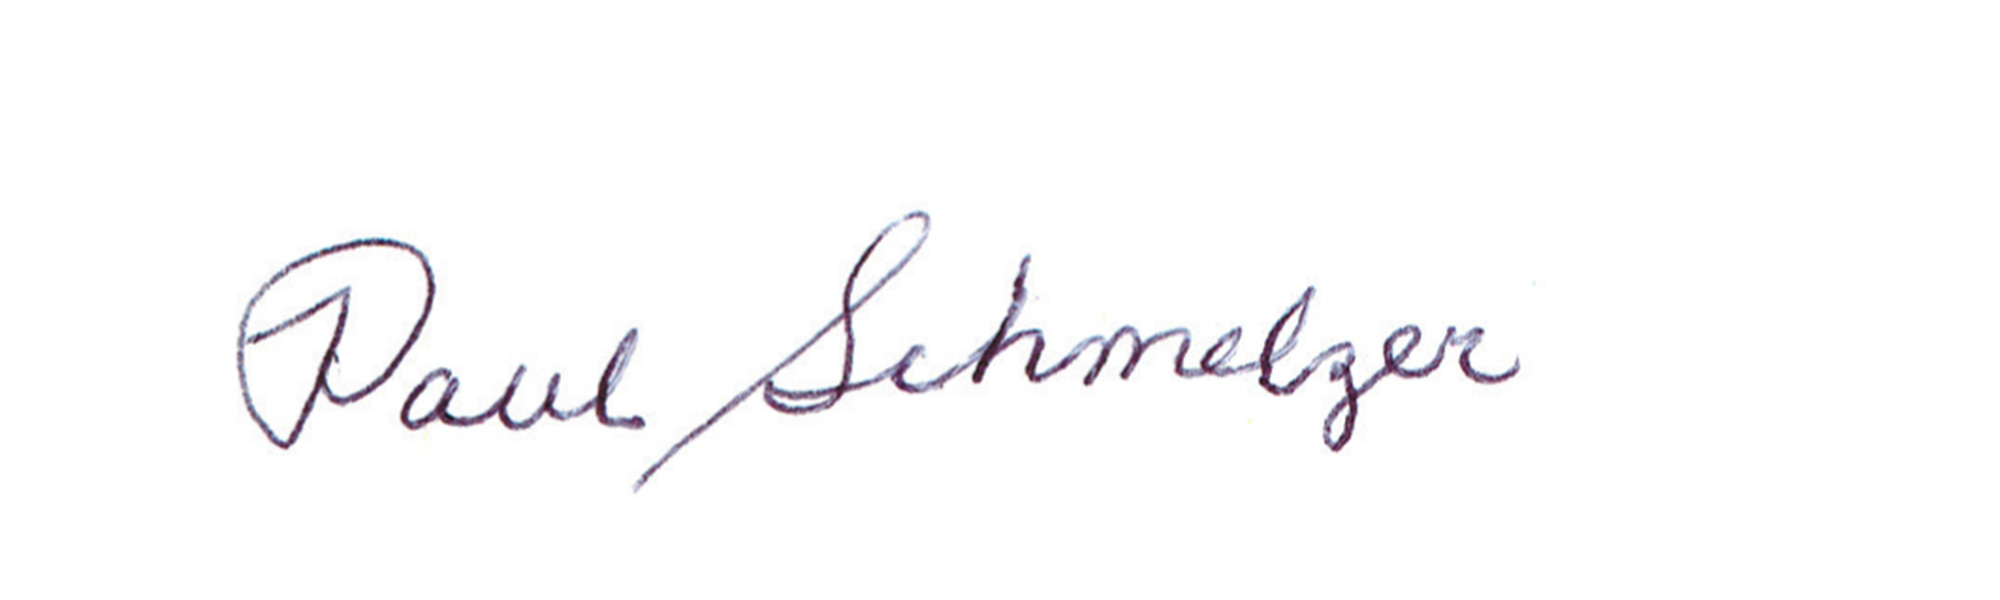 A photograph of Doris (GrannyD) Haddock's written version of the name Paul Schmelzer.